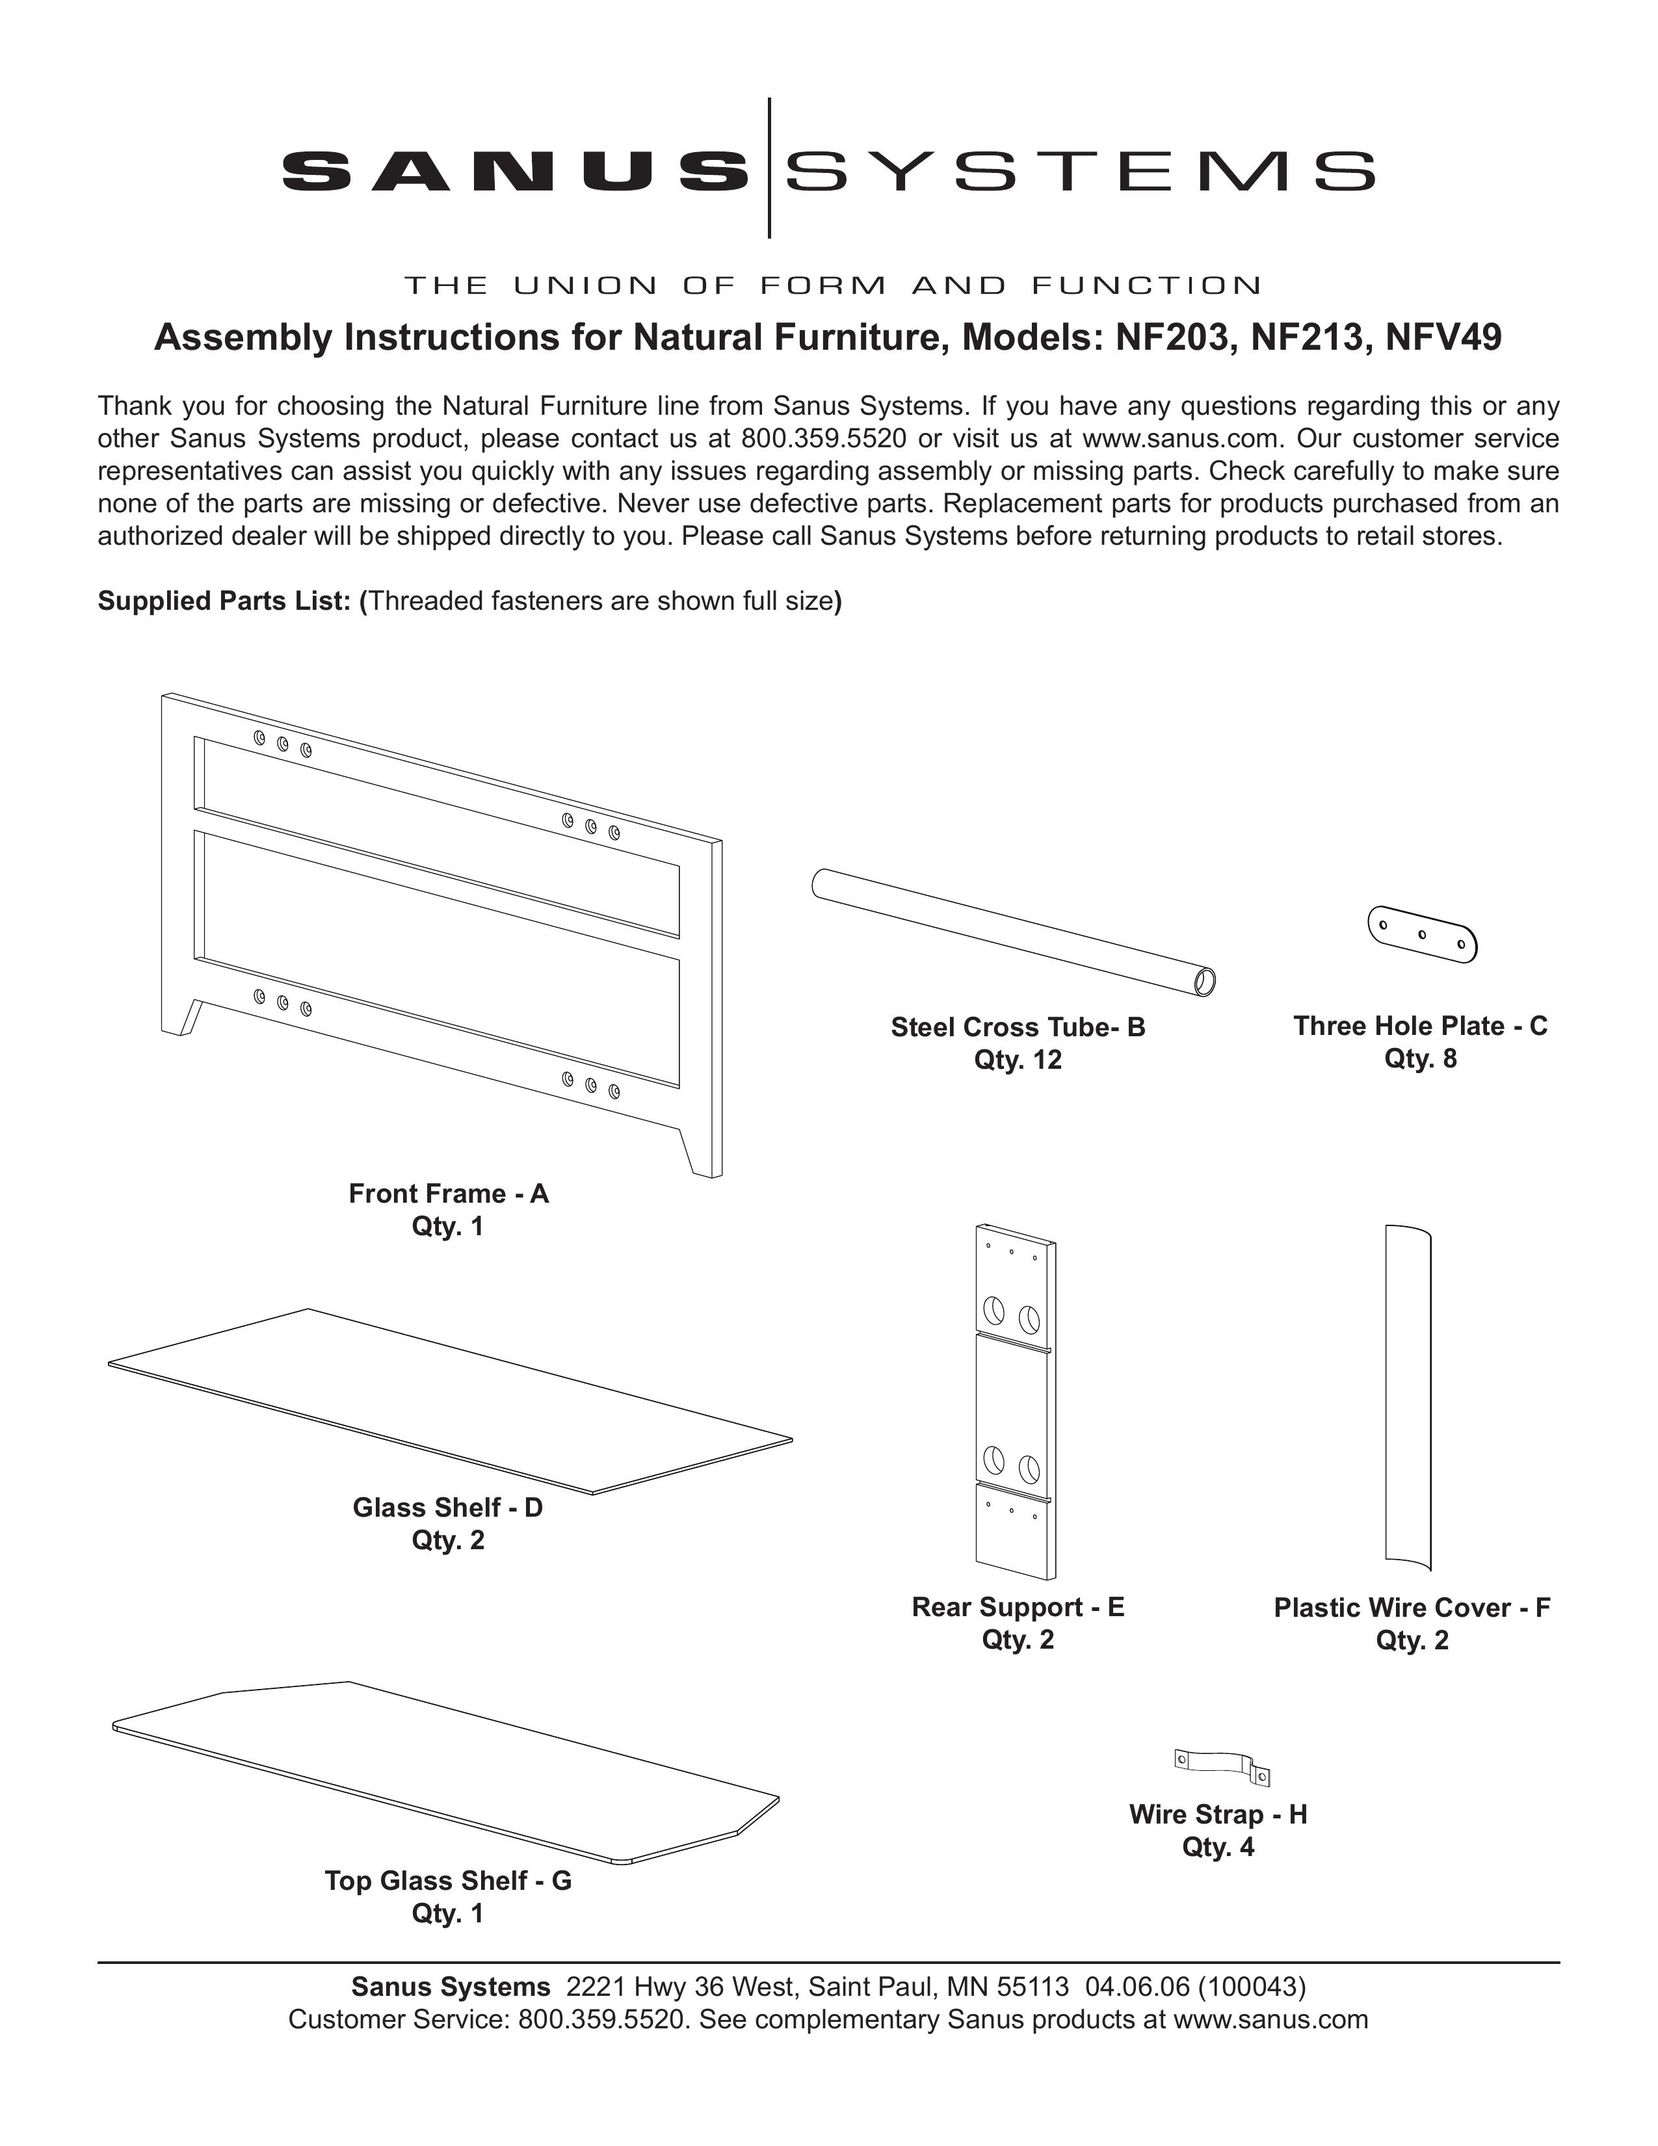 Sanus Systems NF213 Indoor Furnishings User Manual